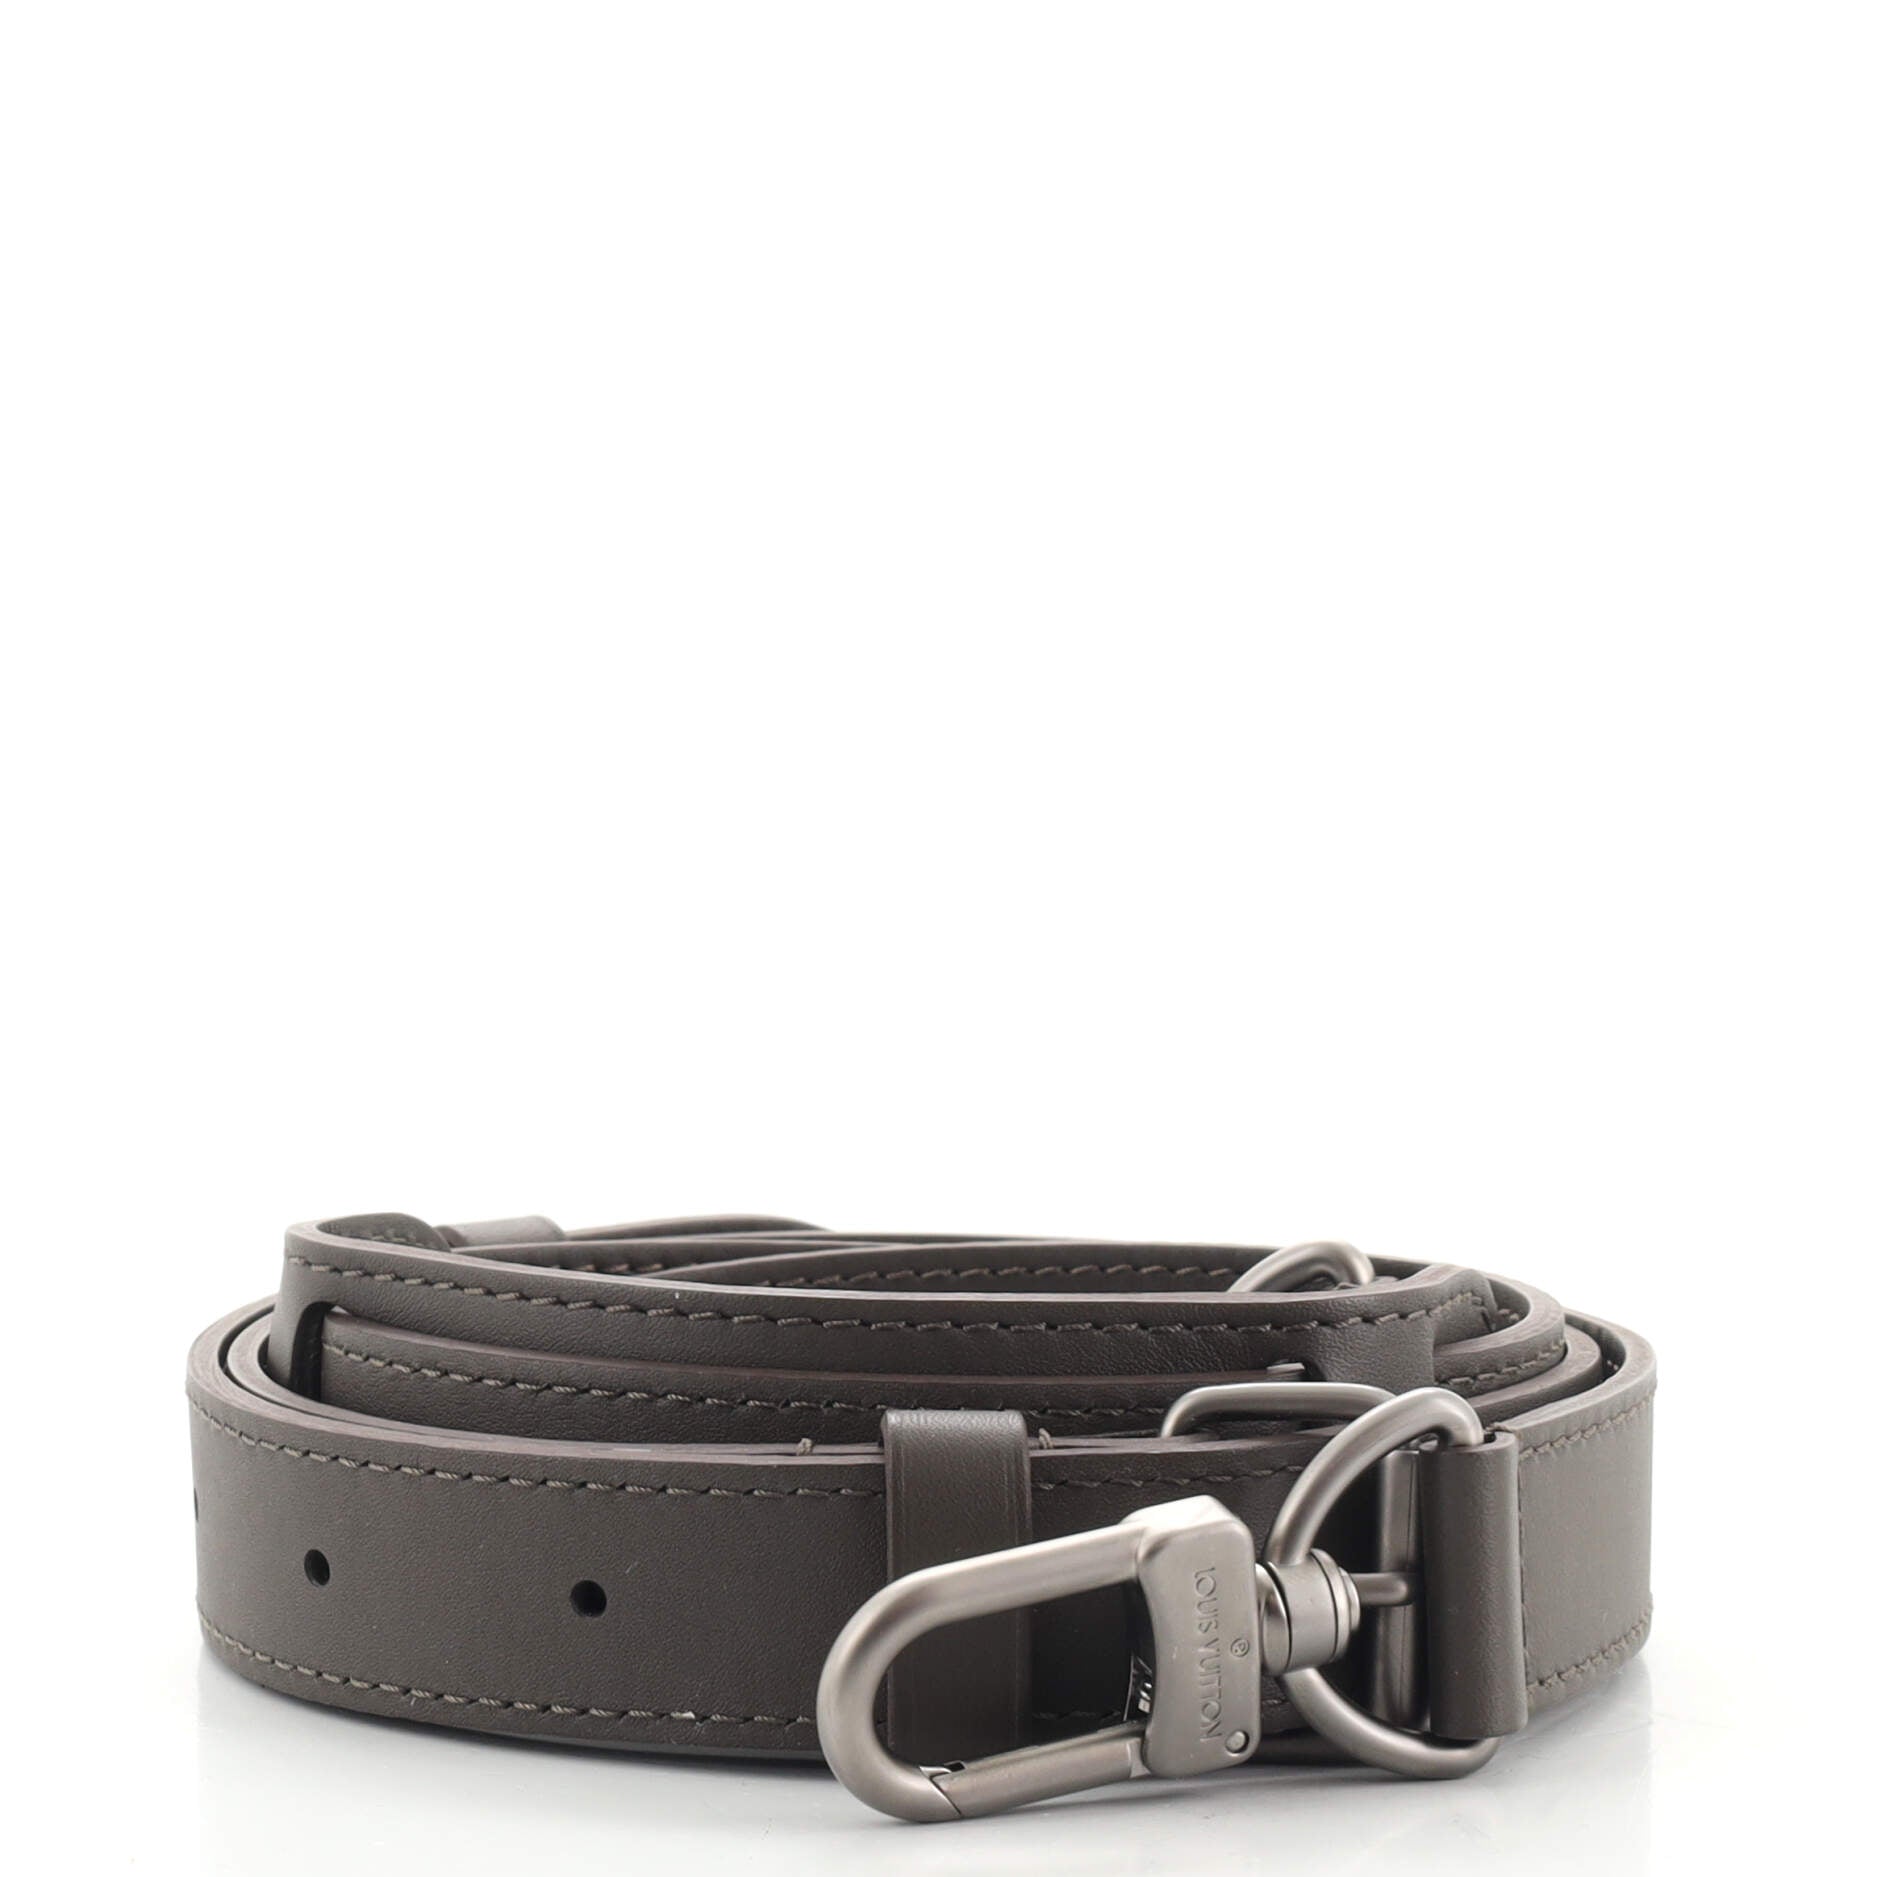 Louis Vuitton Black Leather width 25mm Adjustable Strap, Silver